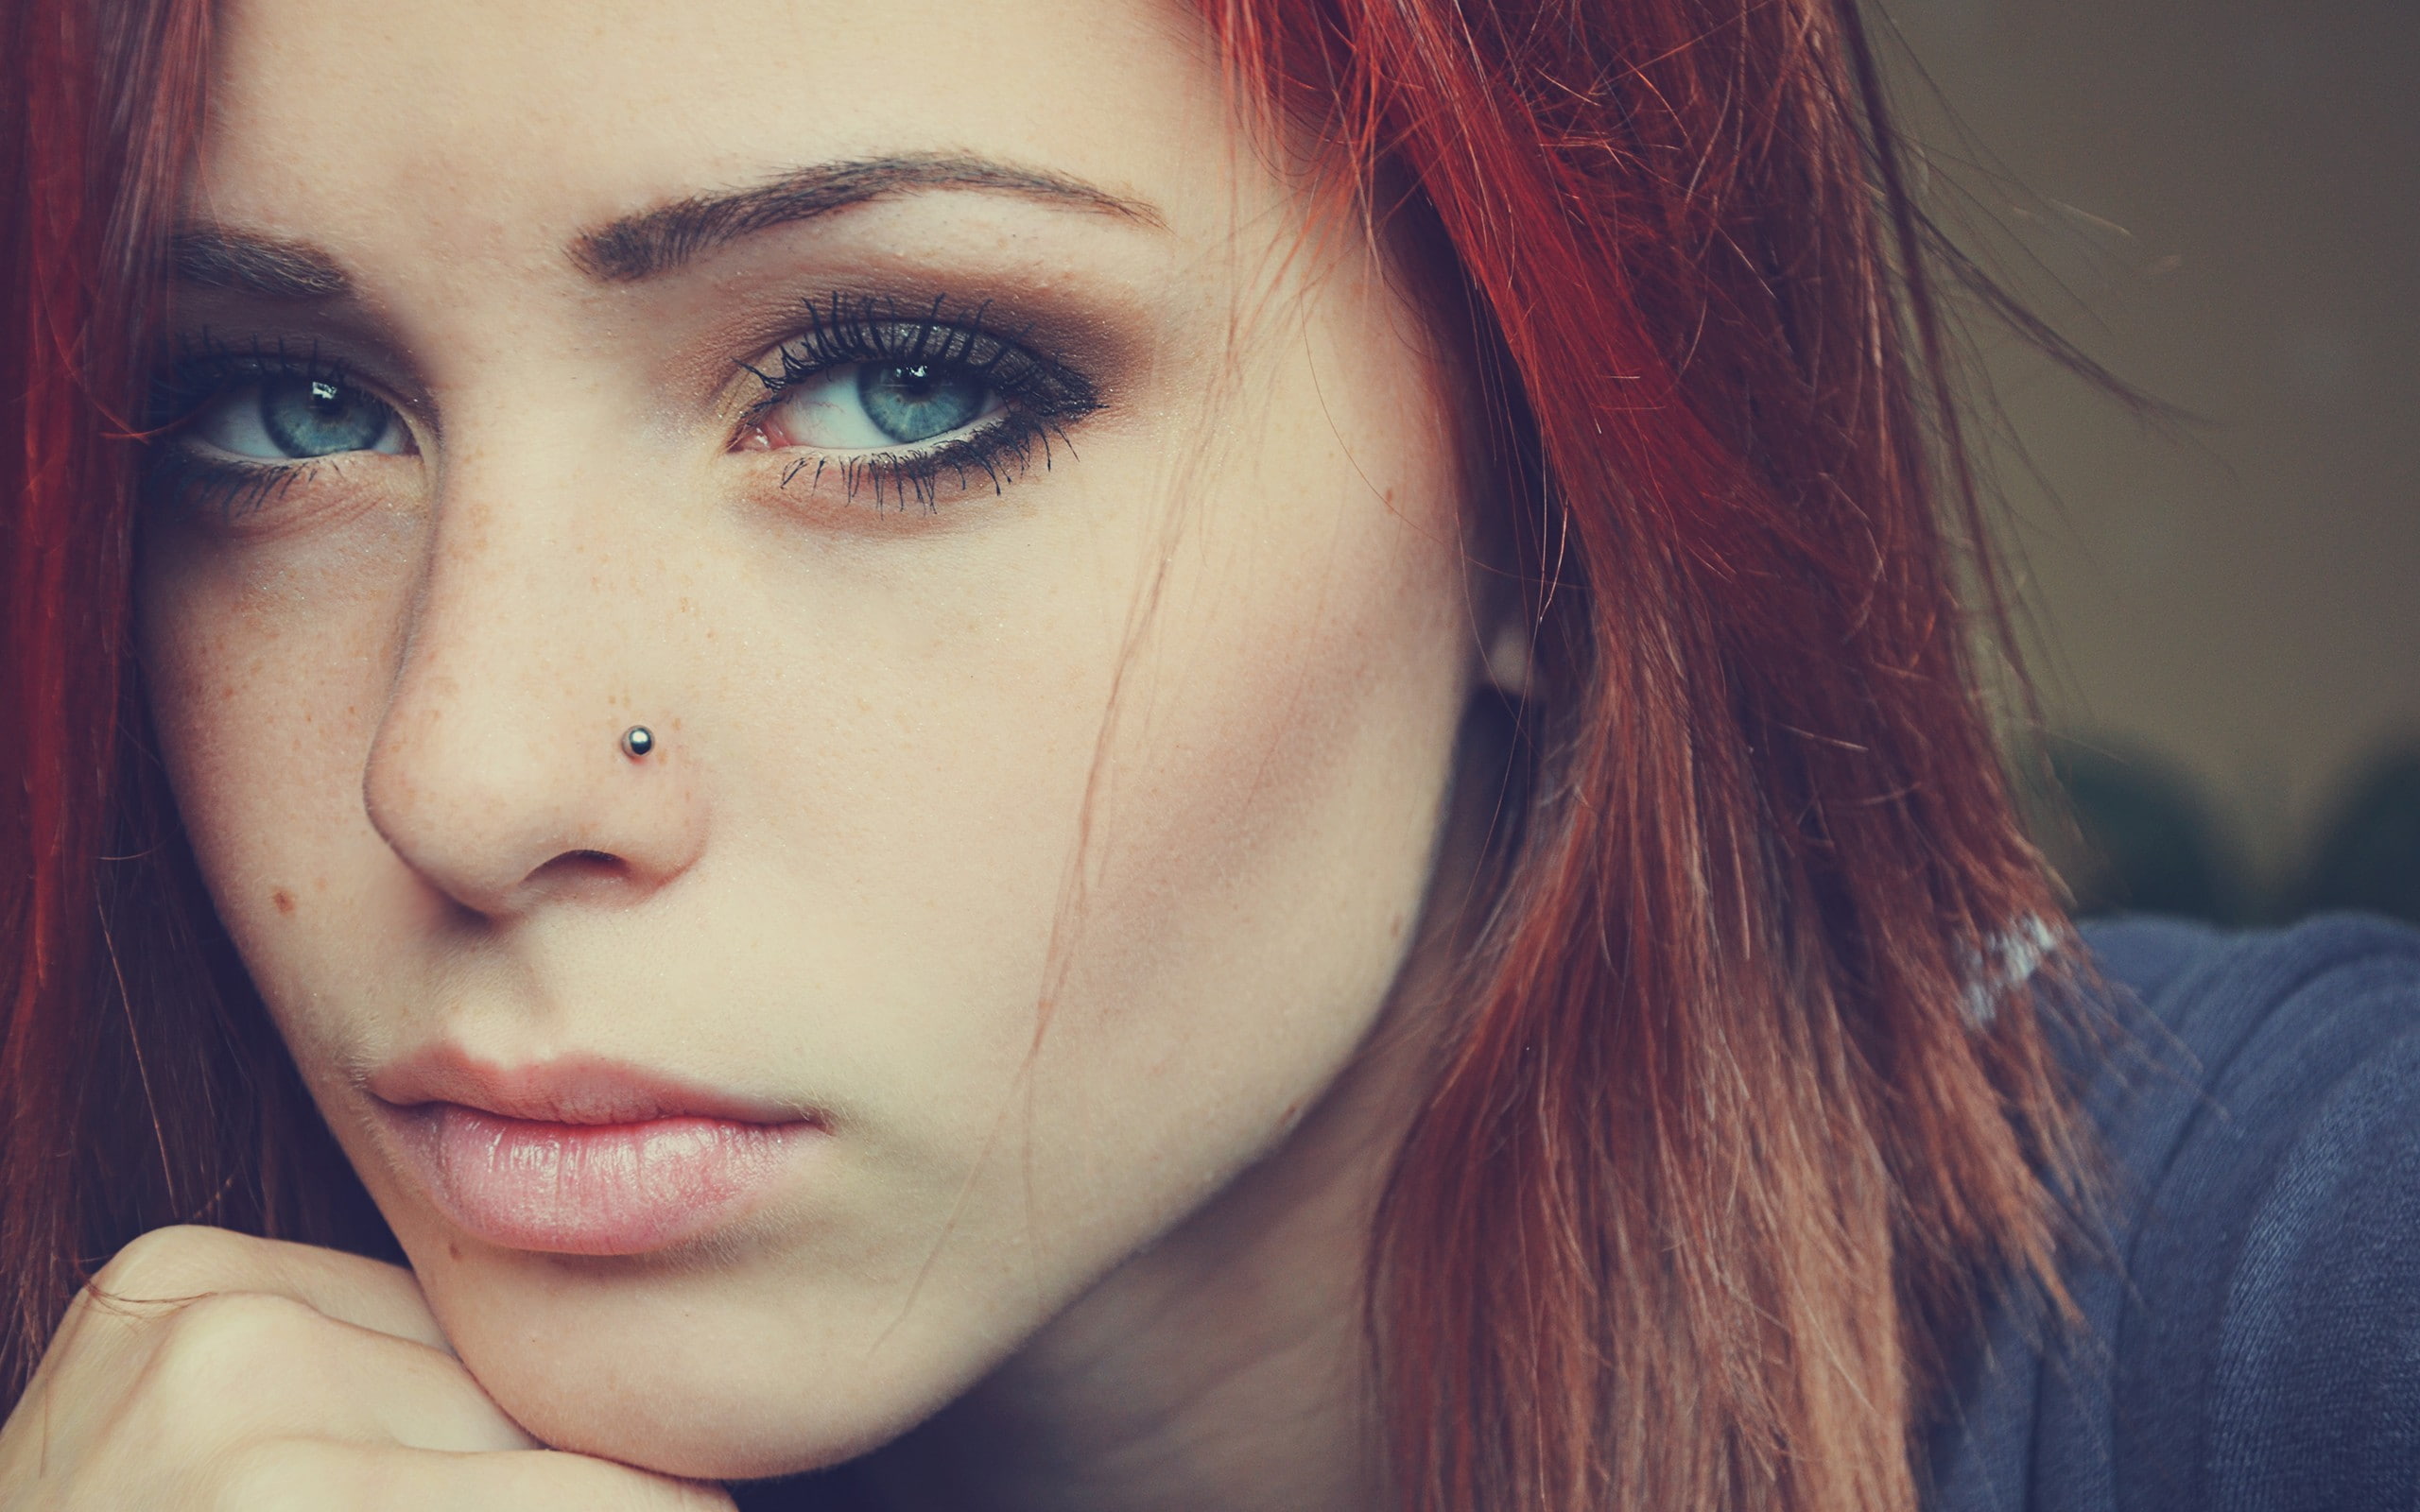 Free Download Hd Wallpaper Model Women Face Eyes Piercing Blue Eyes Redhead Looking At 